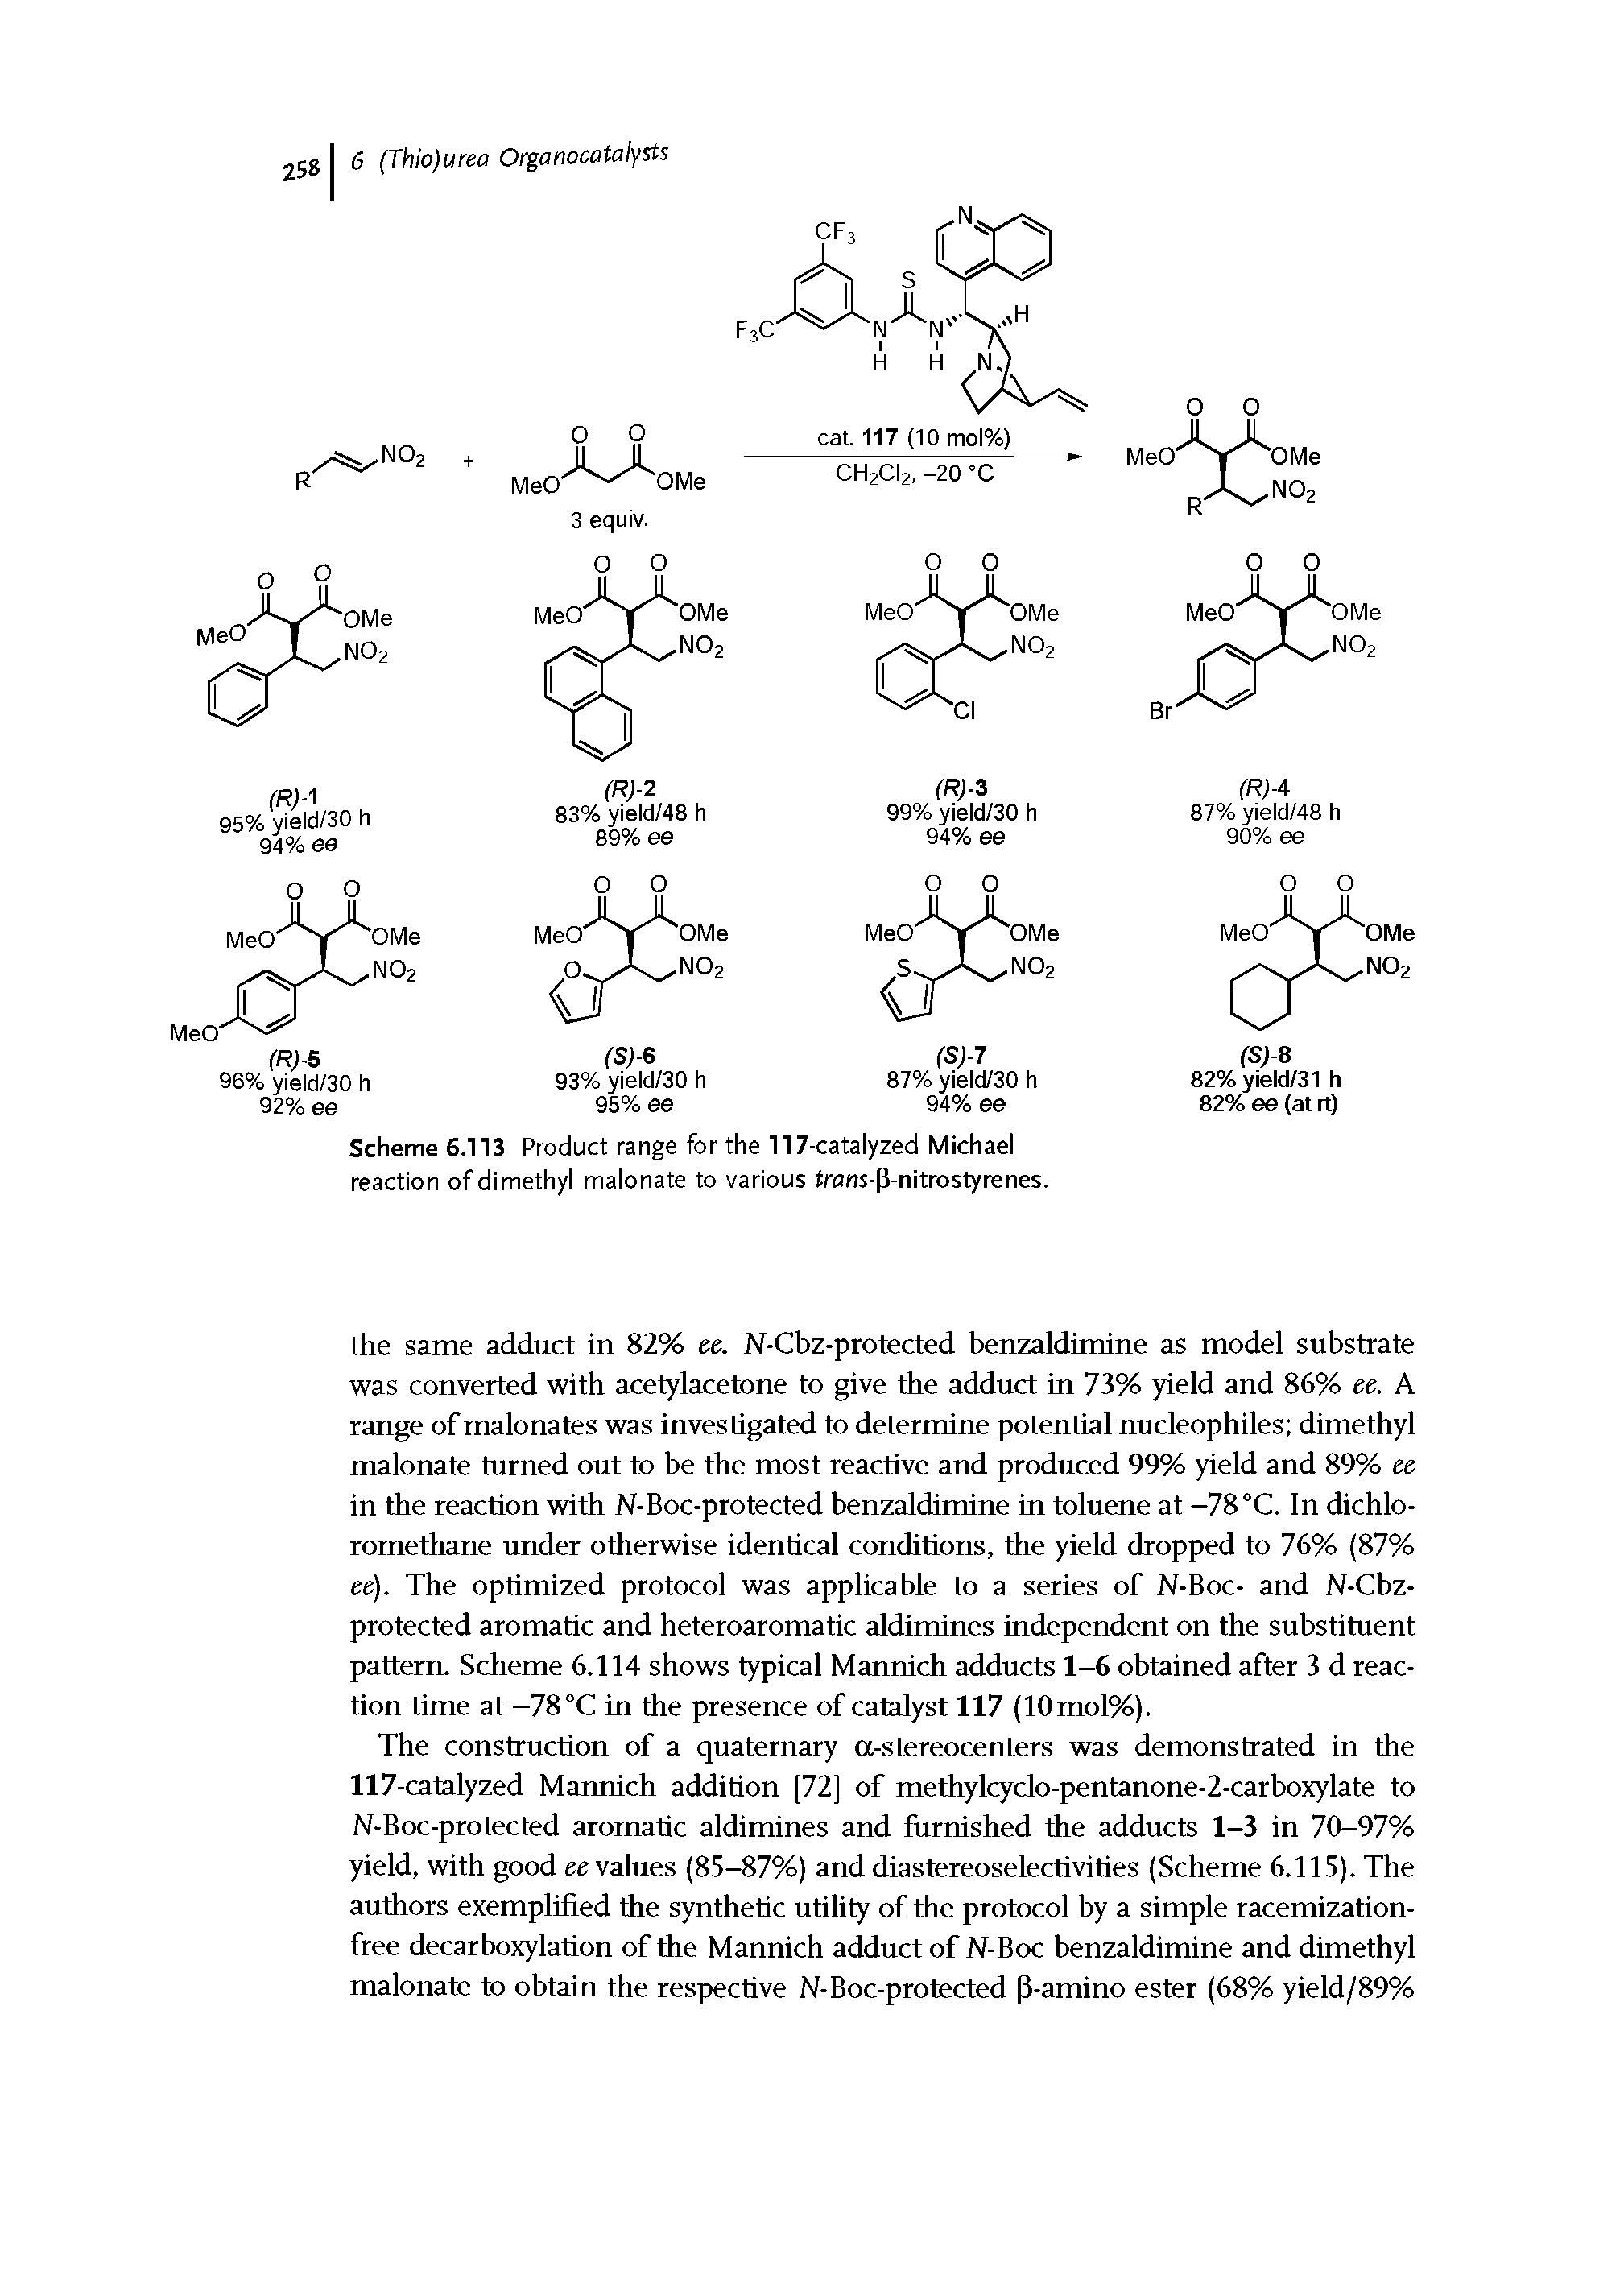 Scheme 6.113 Product range for the 117-catalyzed Michael reaction of dimethyl malonate to various tram-P-nitrostyrenes.